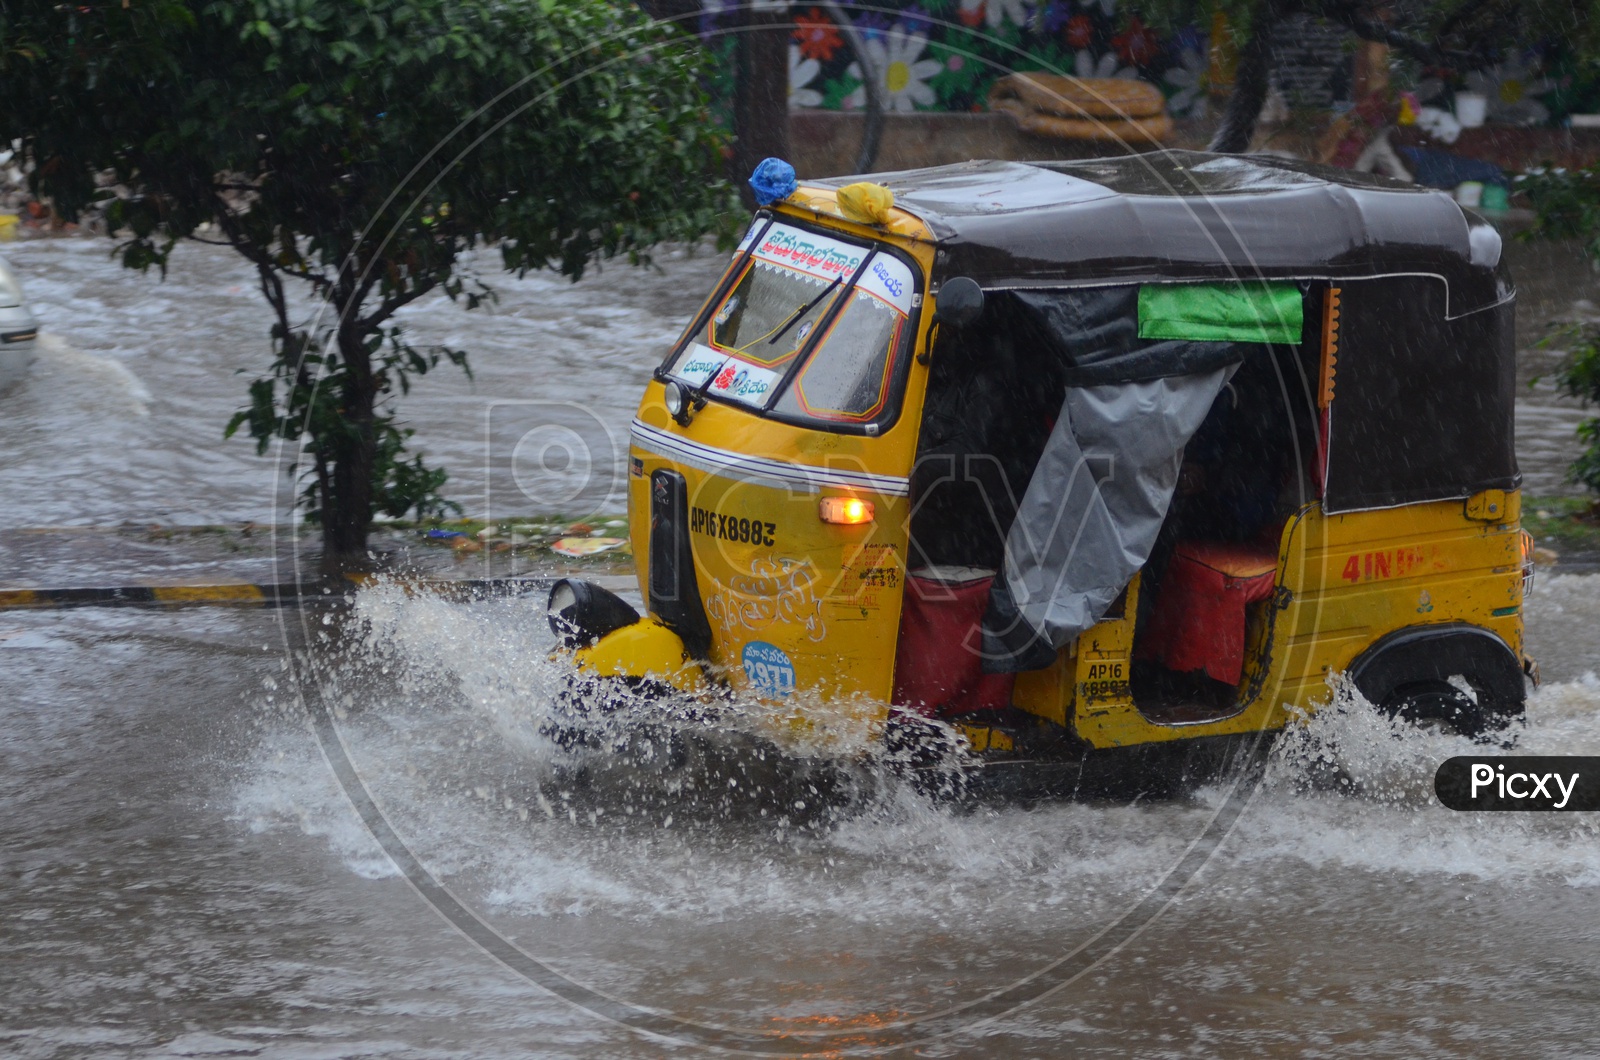 Auto in Water logged street, Cyclone Pedhai, Rain